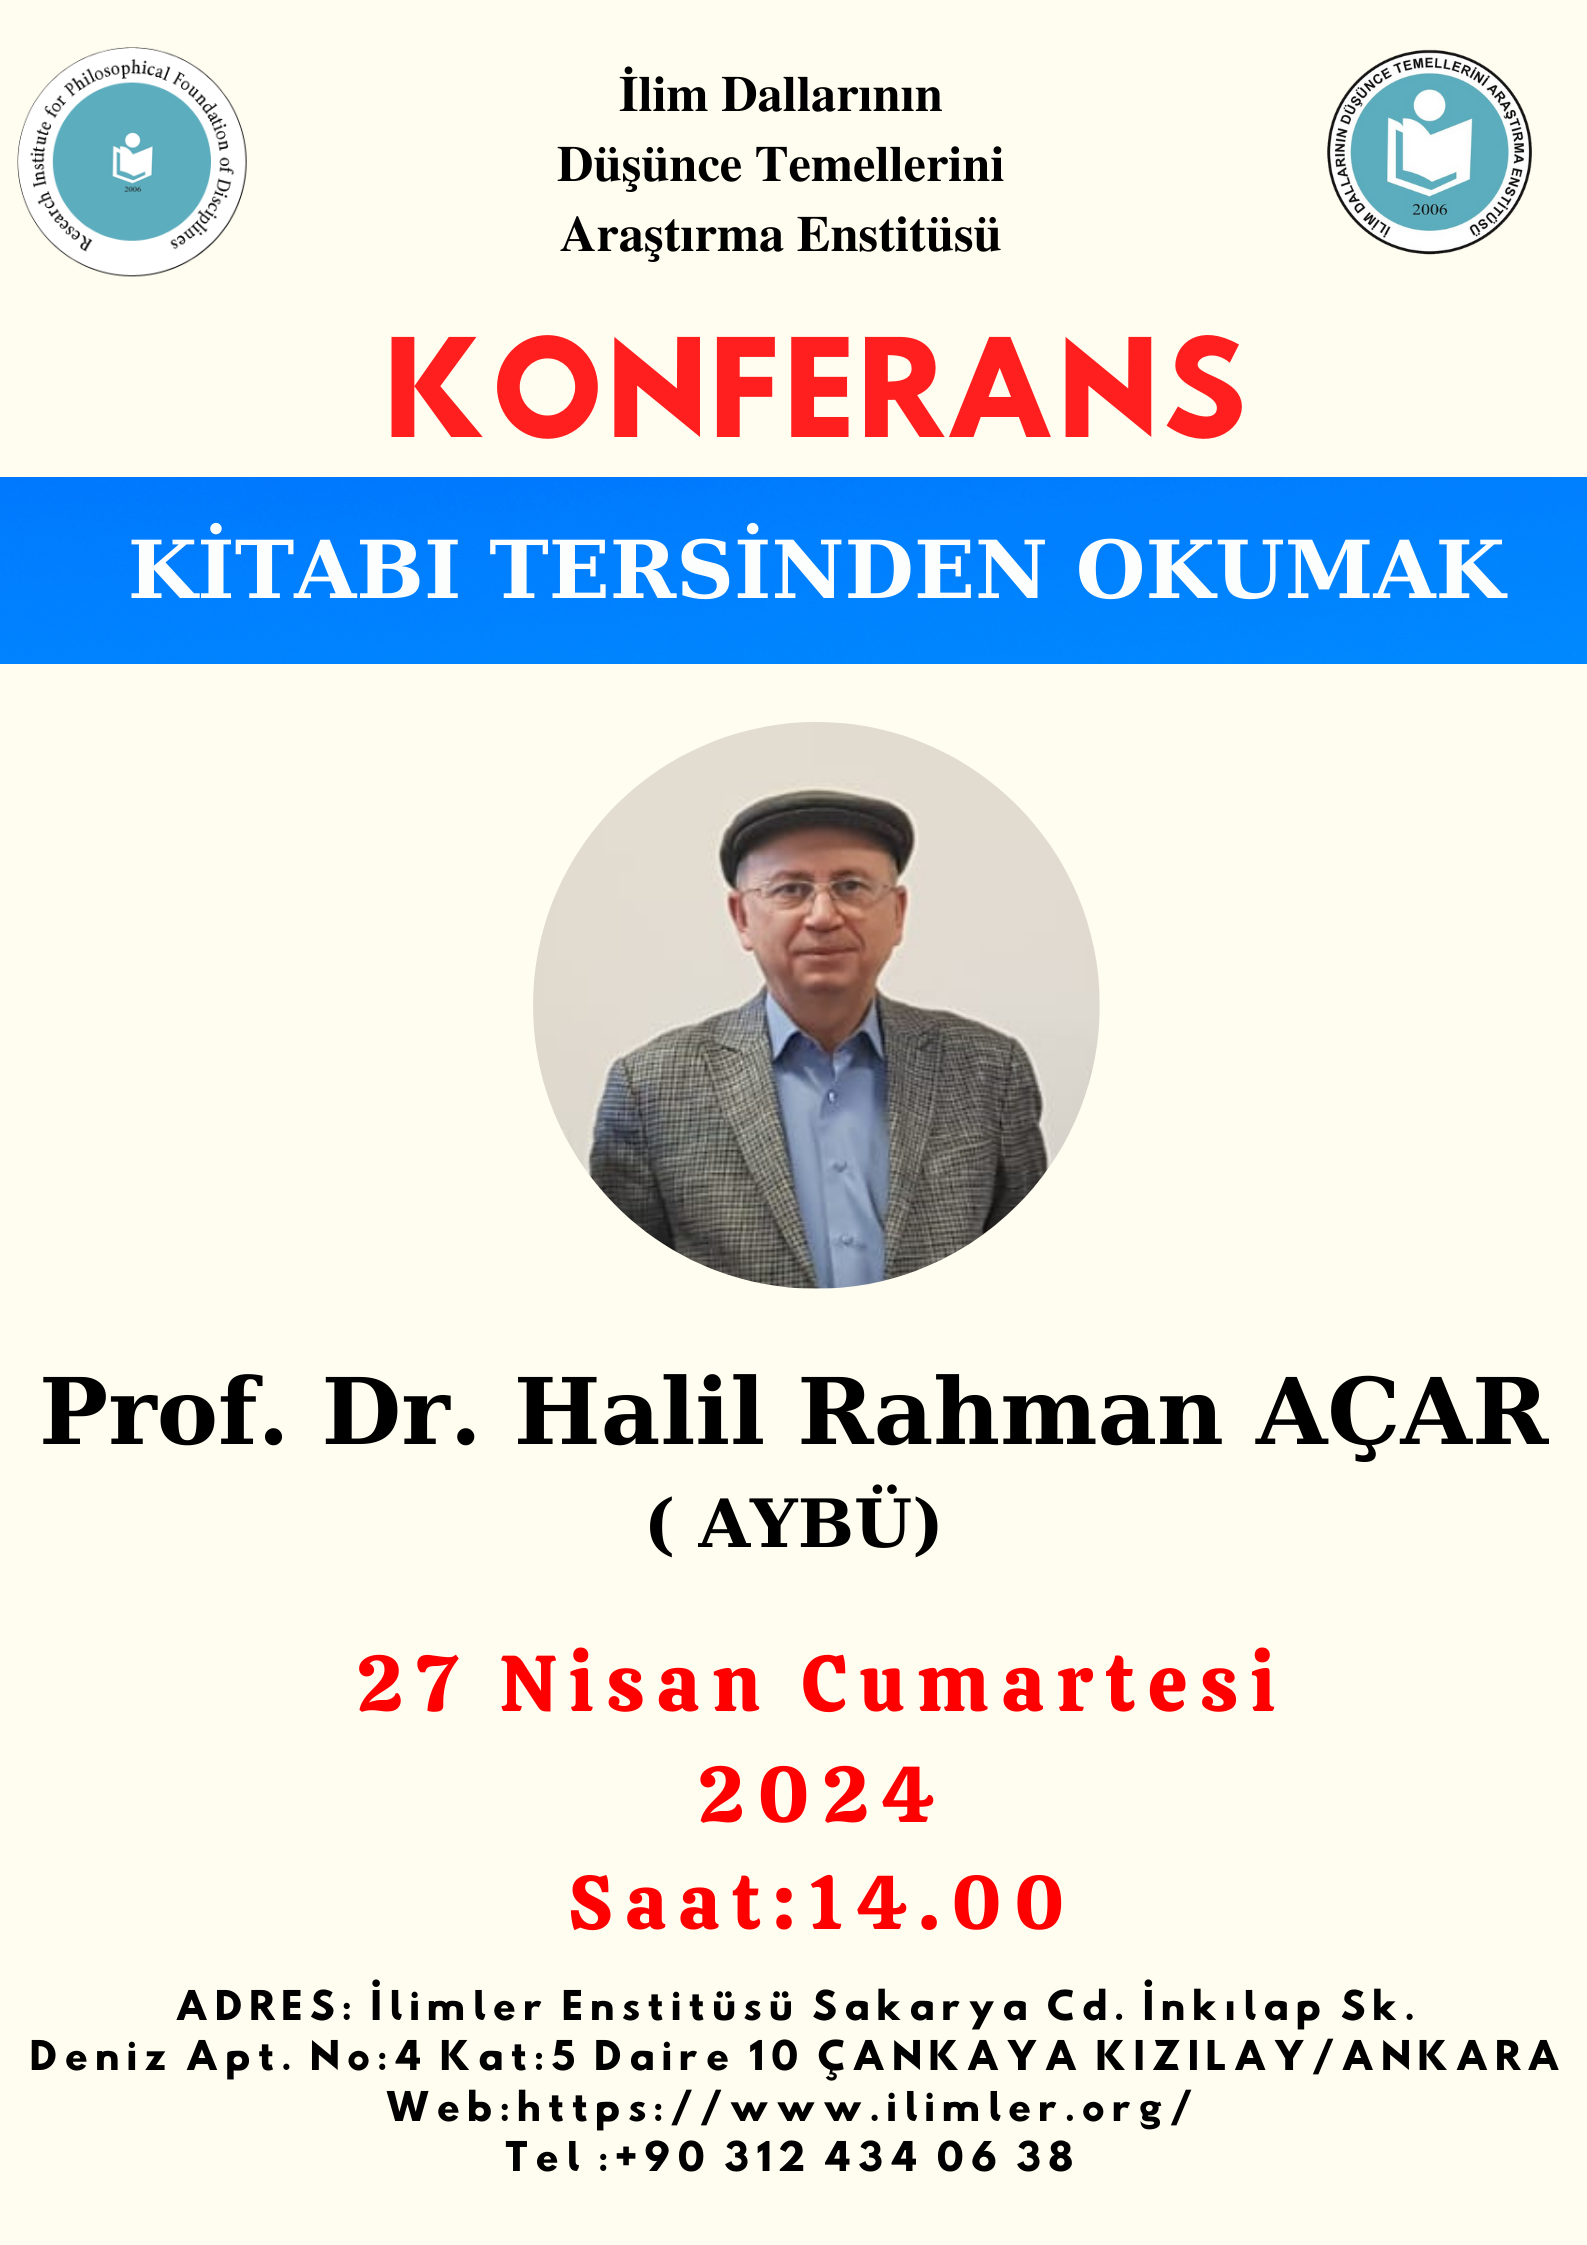 Kitabı Tersinden Okumak -Prof. Dr. Halil Rahman Açar- 27.04.2024